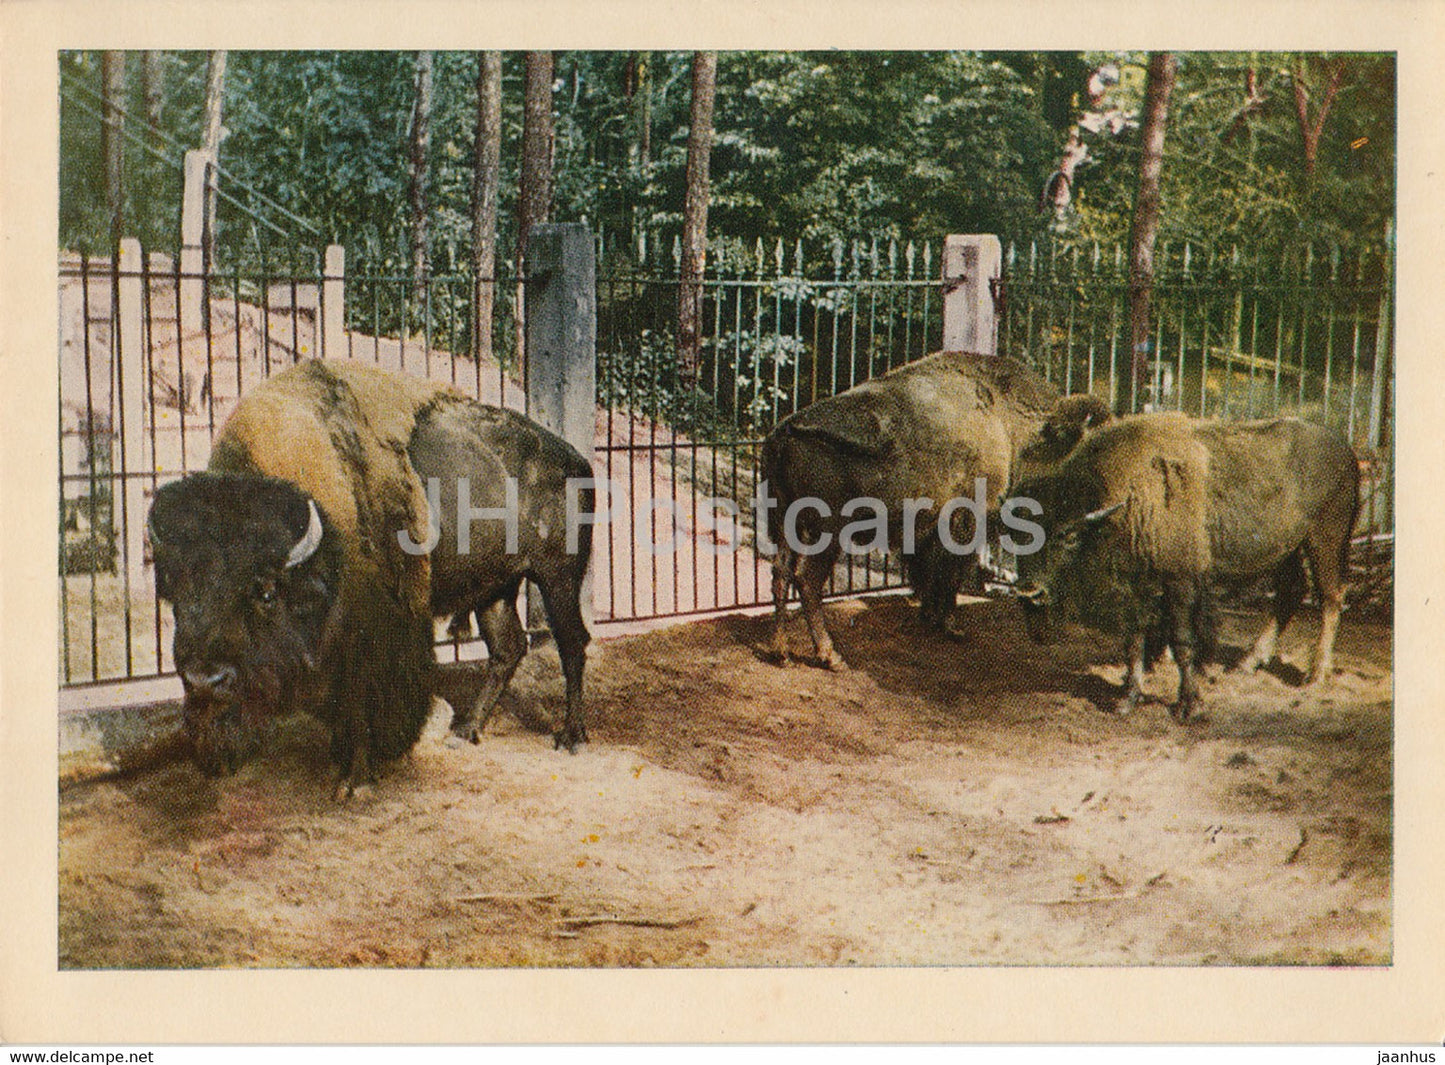 Riga Zoo - American bison - Bison bison - Latvia USSR - unused - JH Postcards